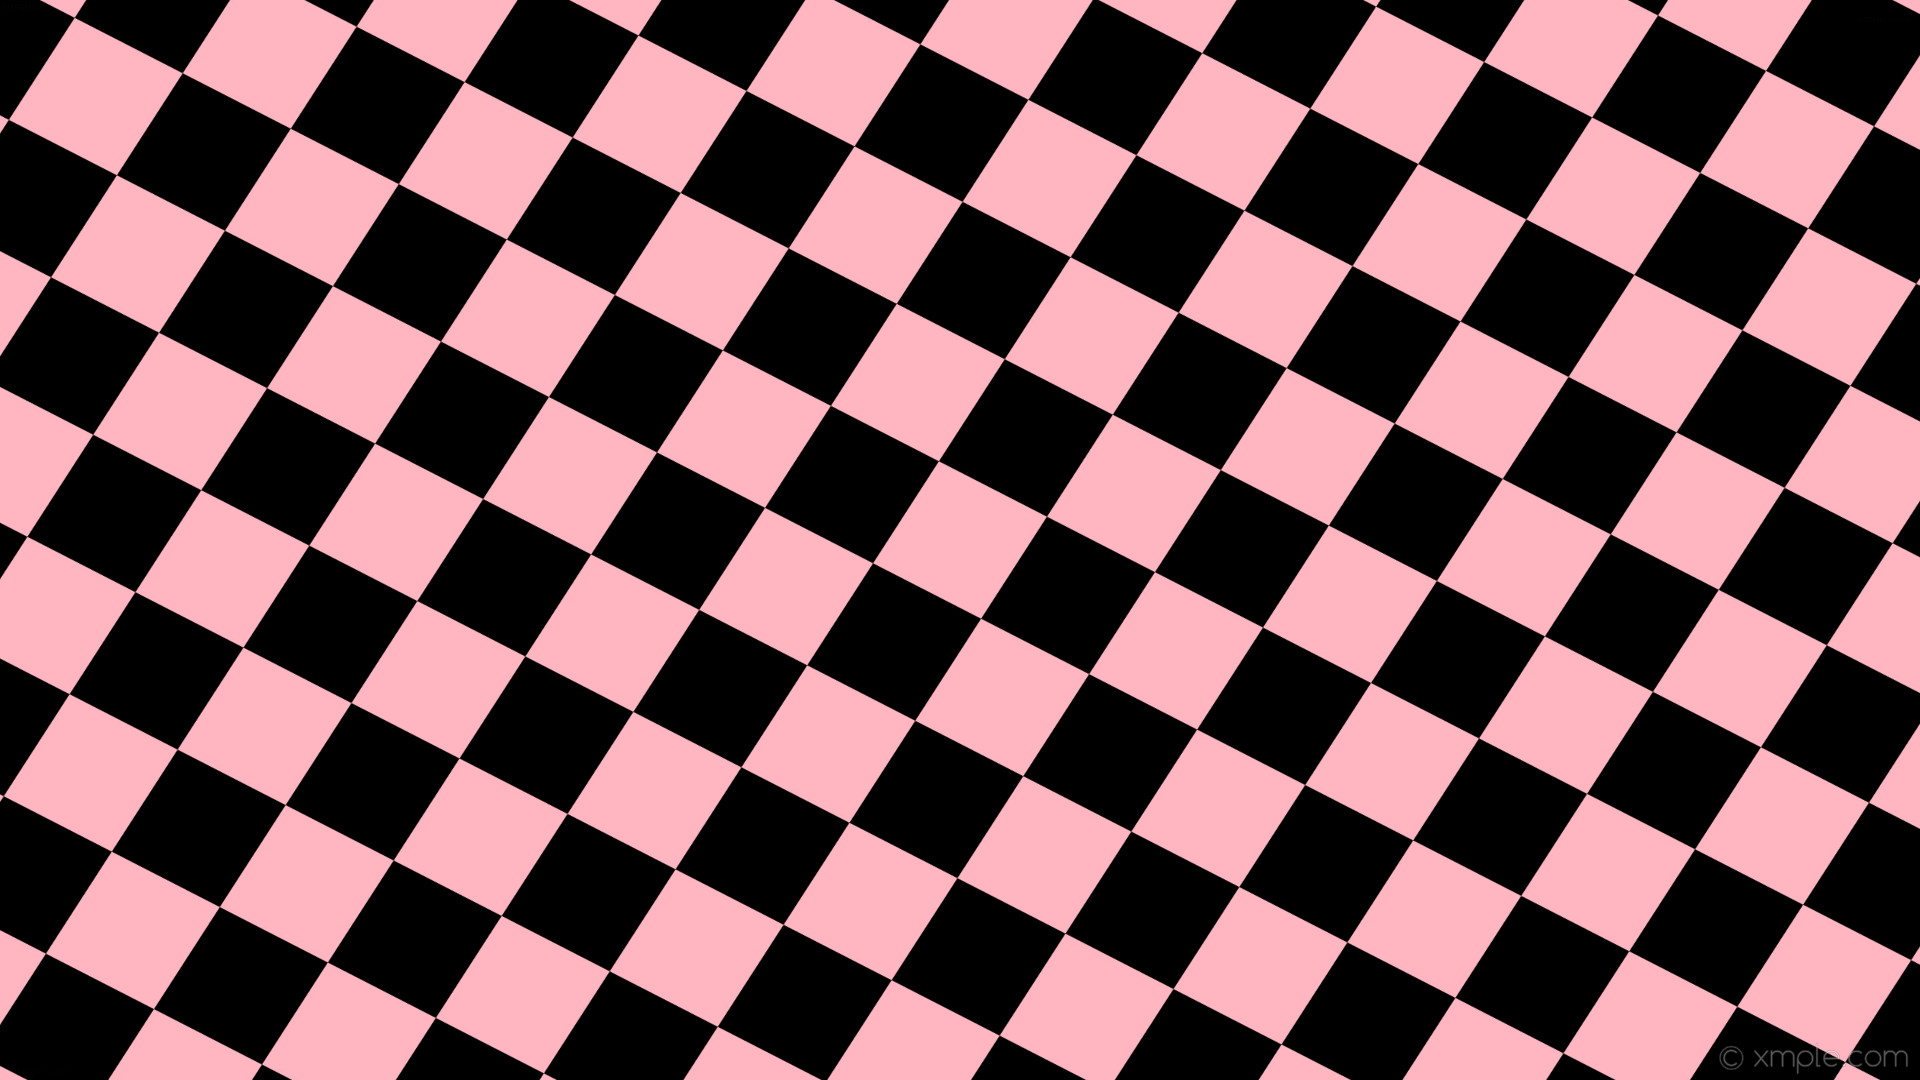 1920x1080 wallpaper black pink diamond lozenge rhombus light pink #ffb6c1 #000000 15Â°  180px 163px